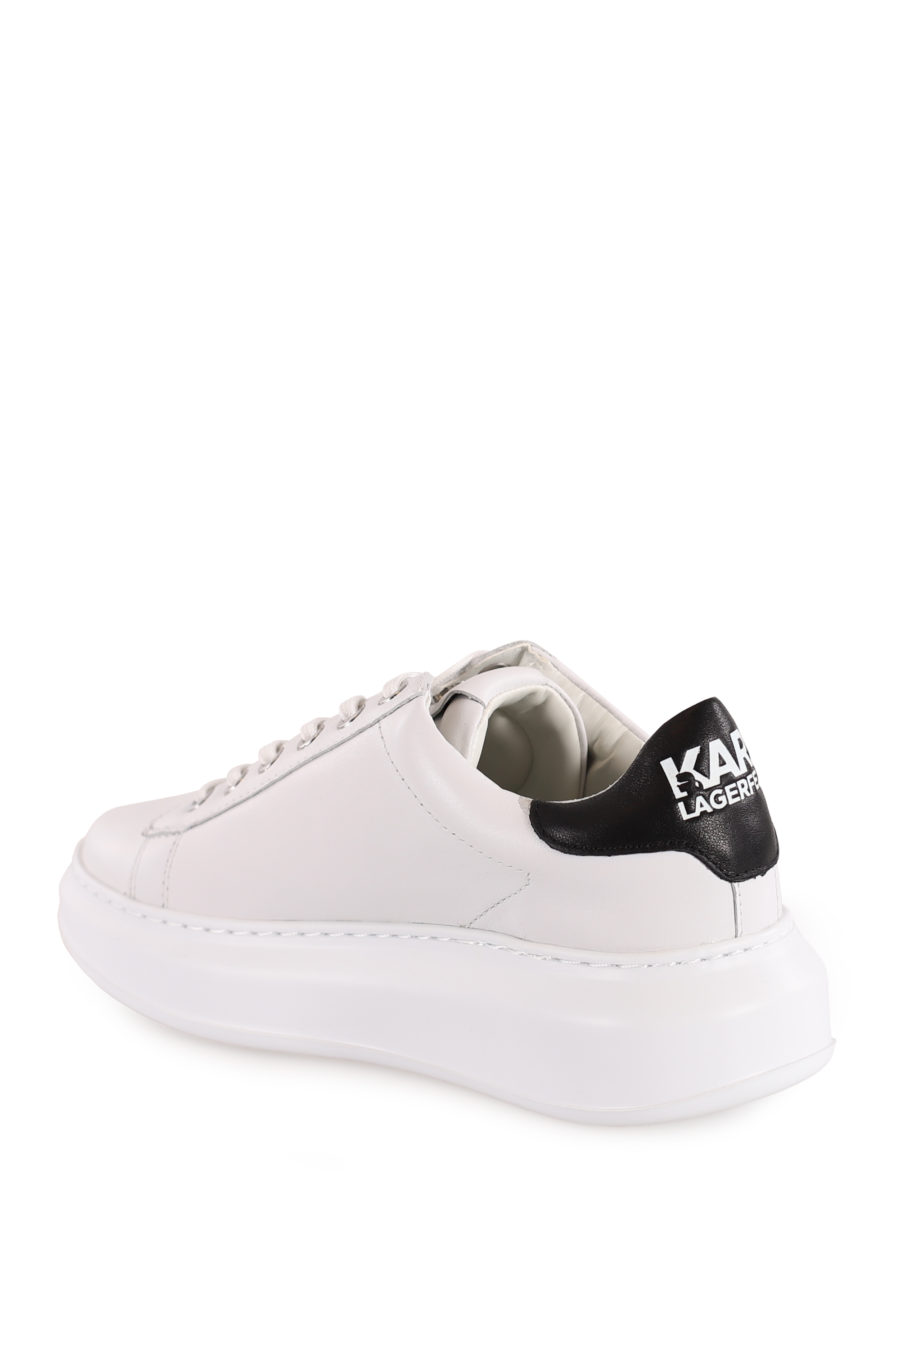 Zapatillas blancas con logotipo "Karl Ikonic" - 2cd79c9d9d81ca705aa0333cd435a59c5d310efe